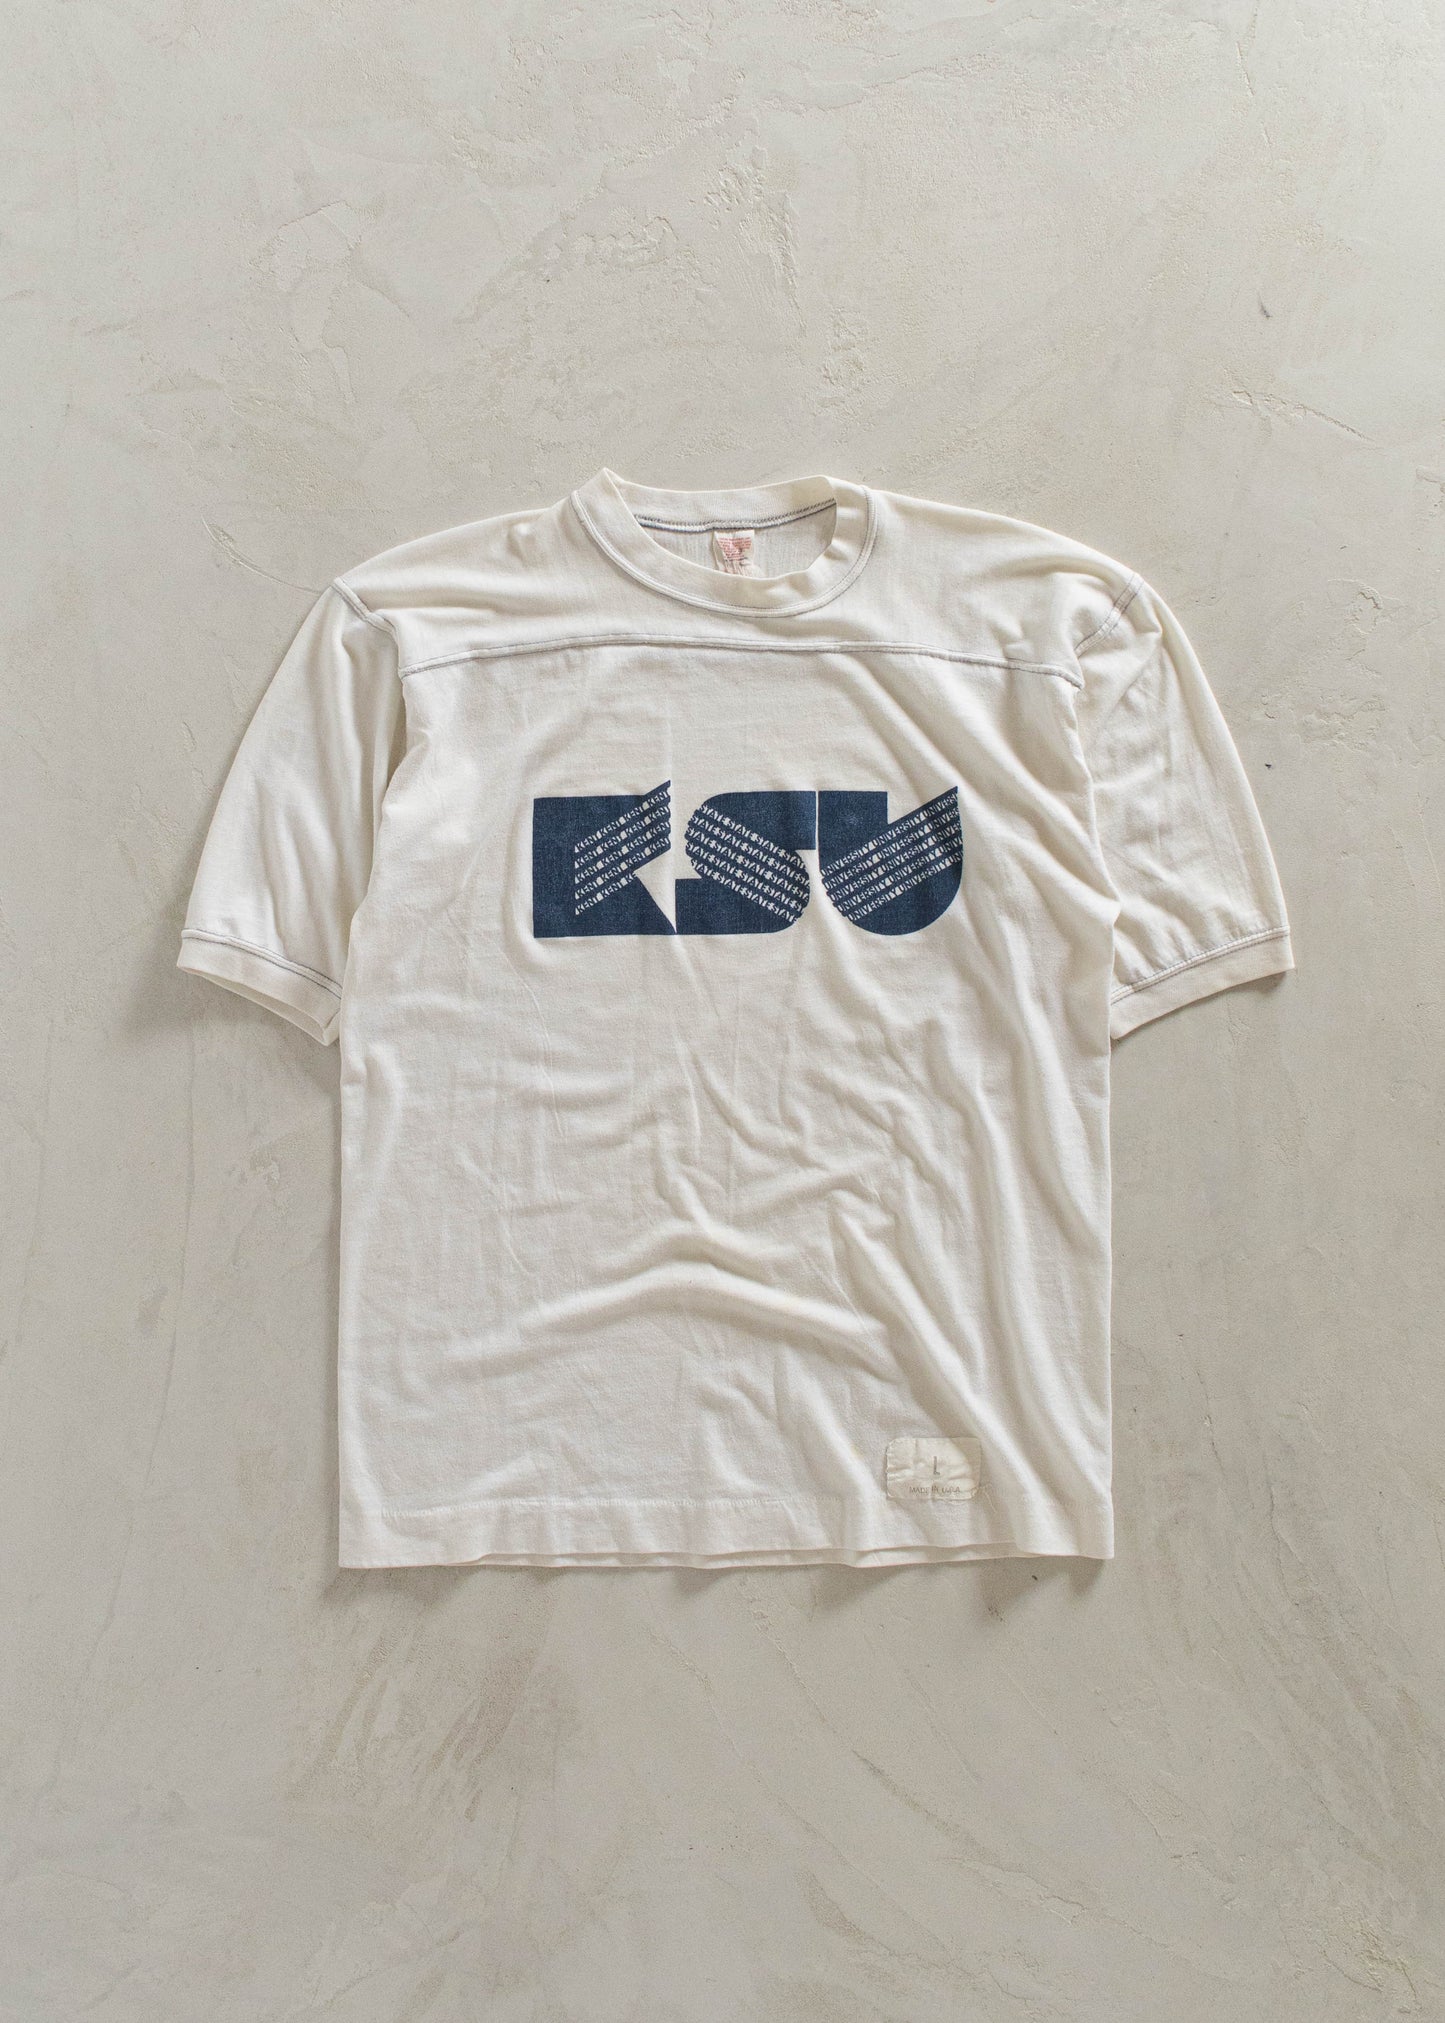 1970s Kent State University Contrast Stitch Sport T-Shirt Size M/L